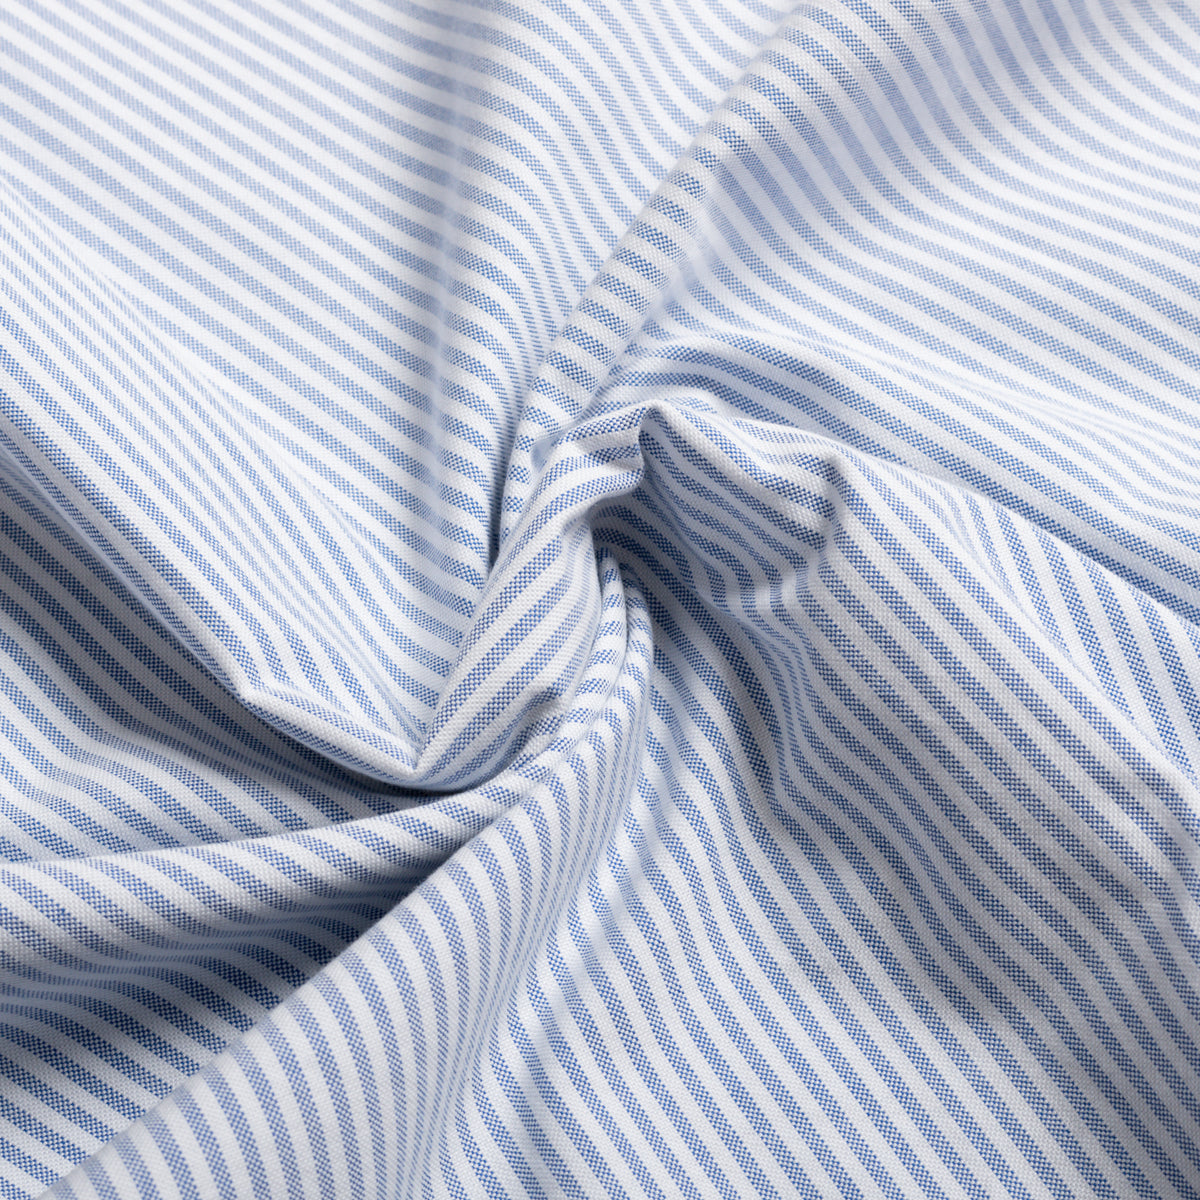 Ticking Stripe Blue & White Oxford Button Down Shirt